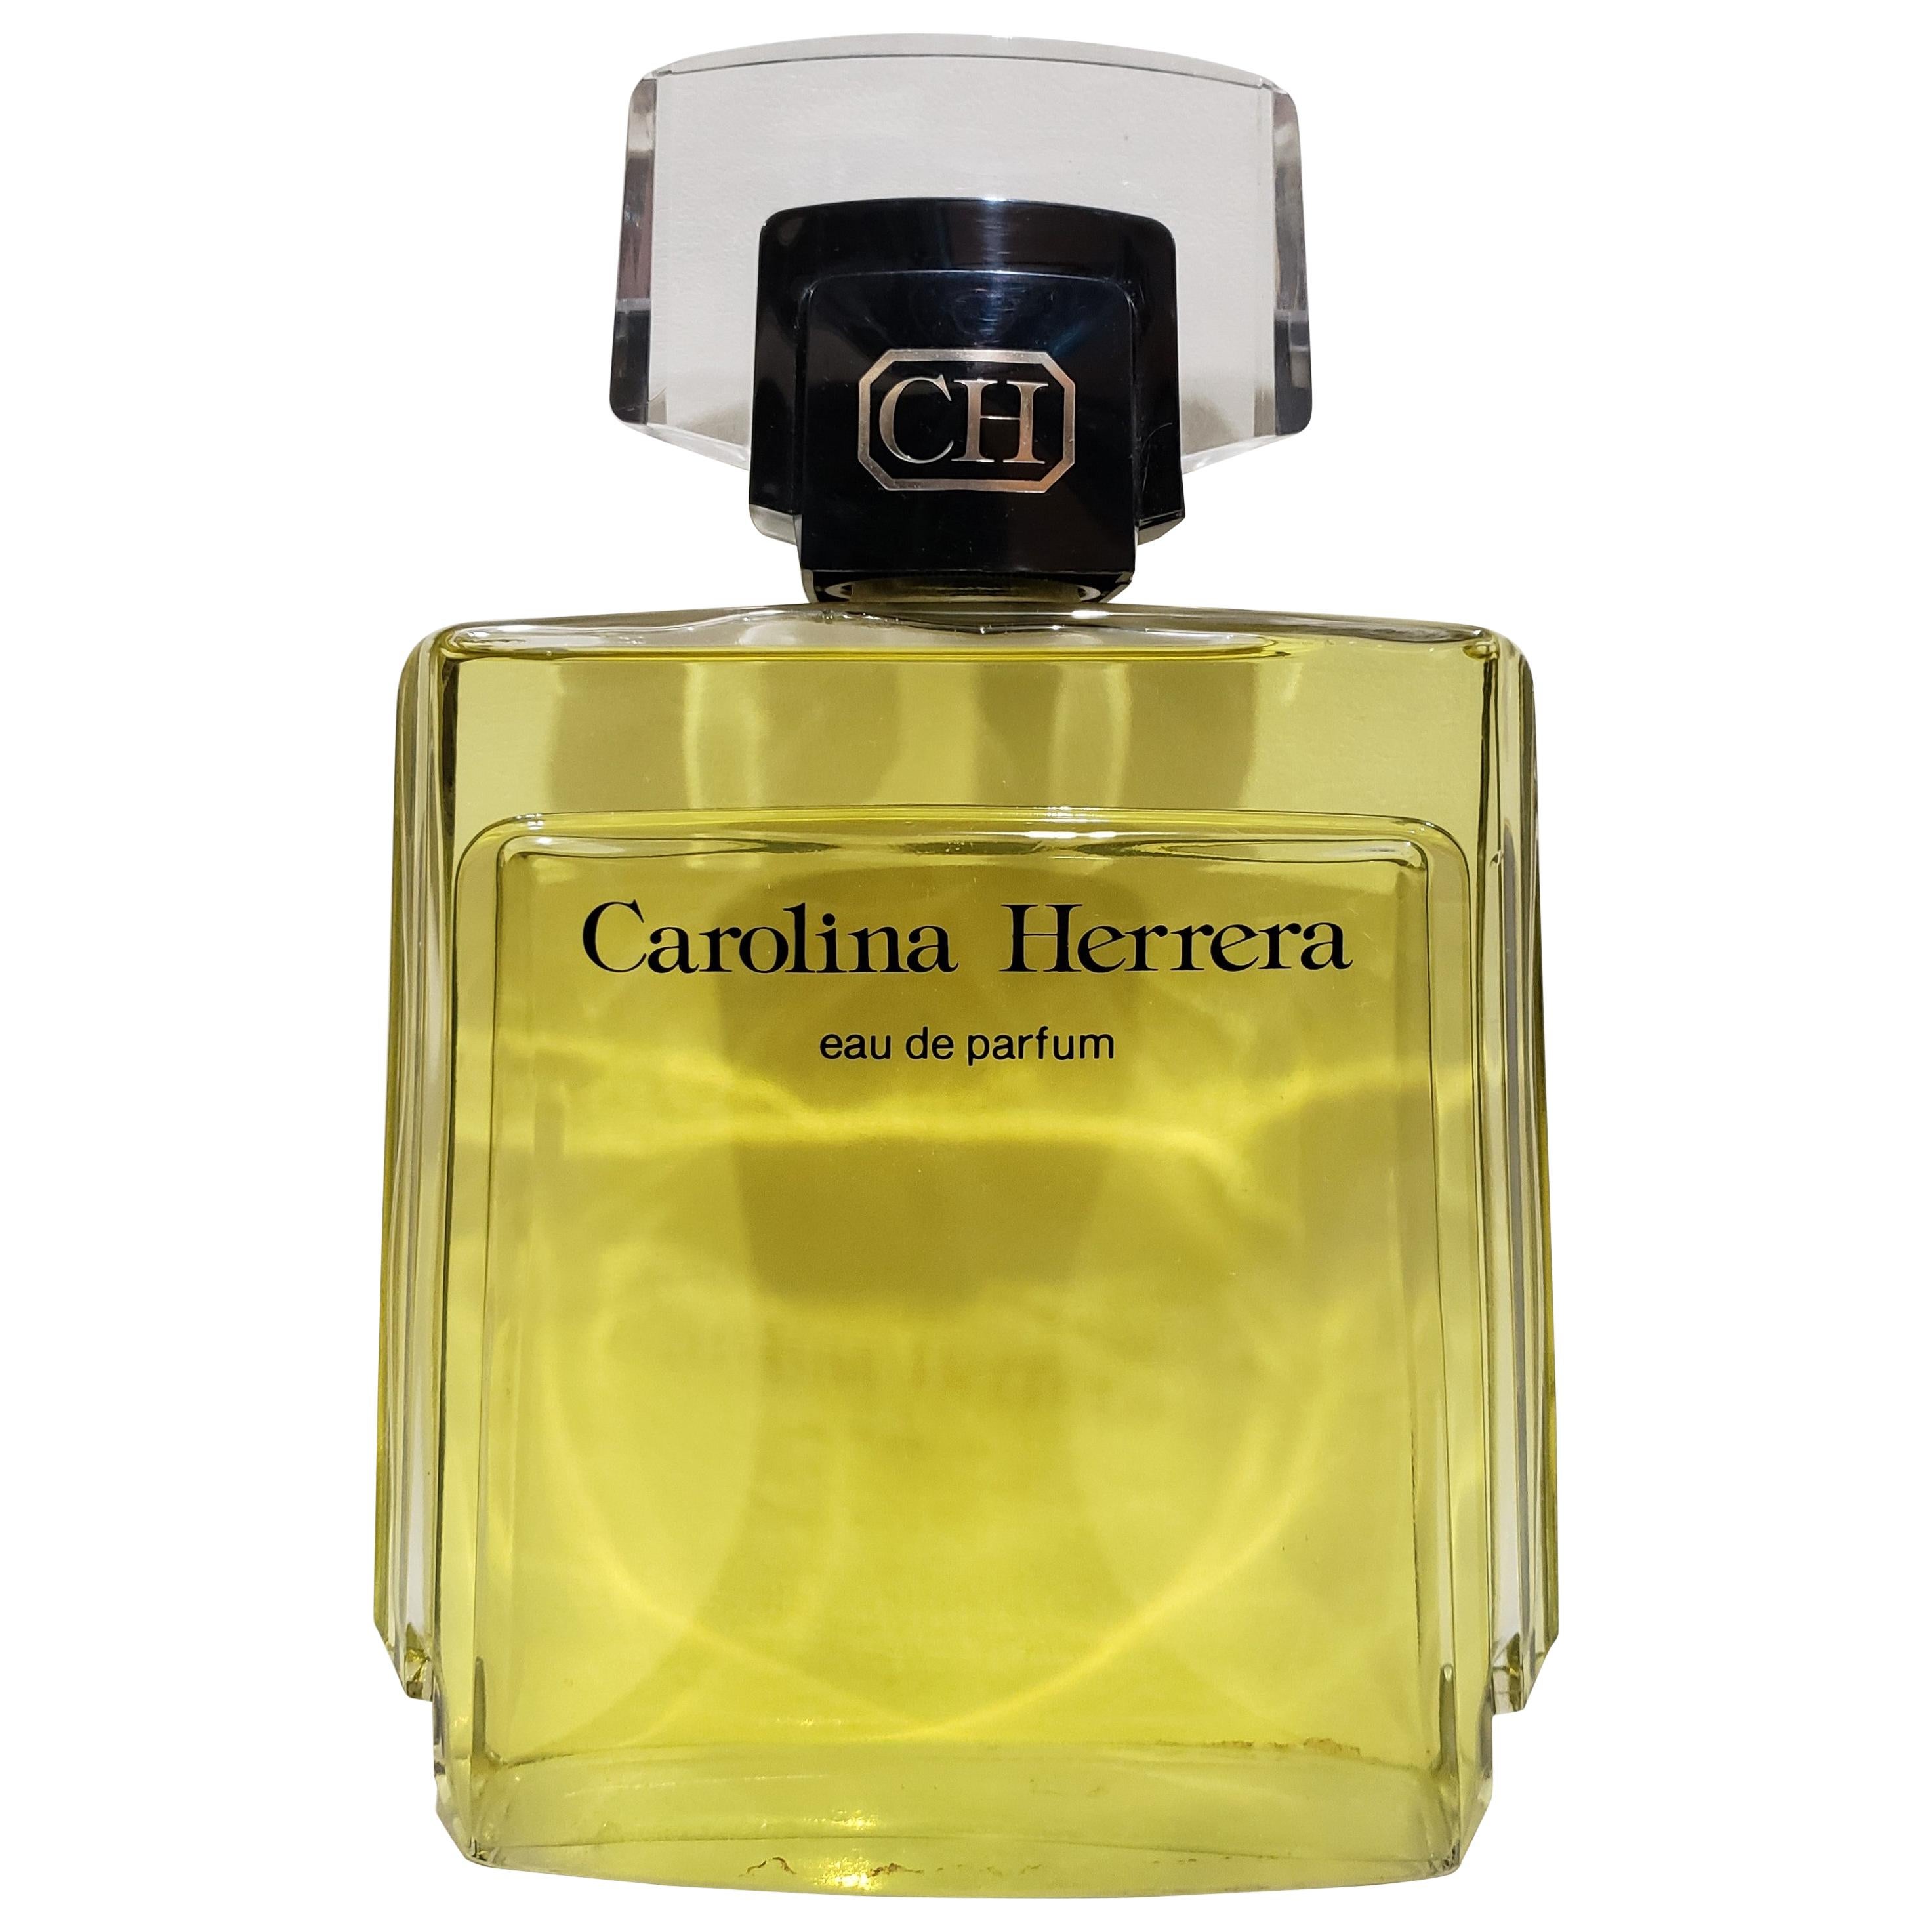 Carolina Herrera Store Display Factice Perfume Bottle